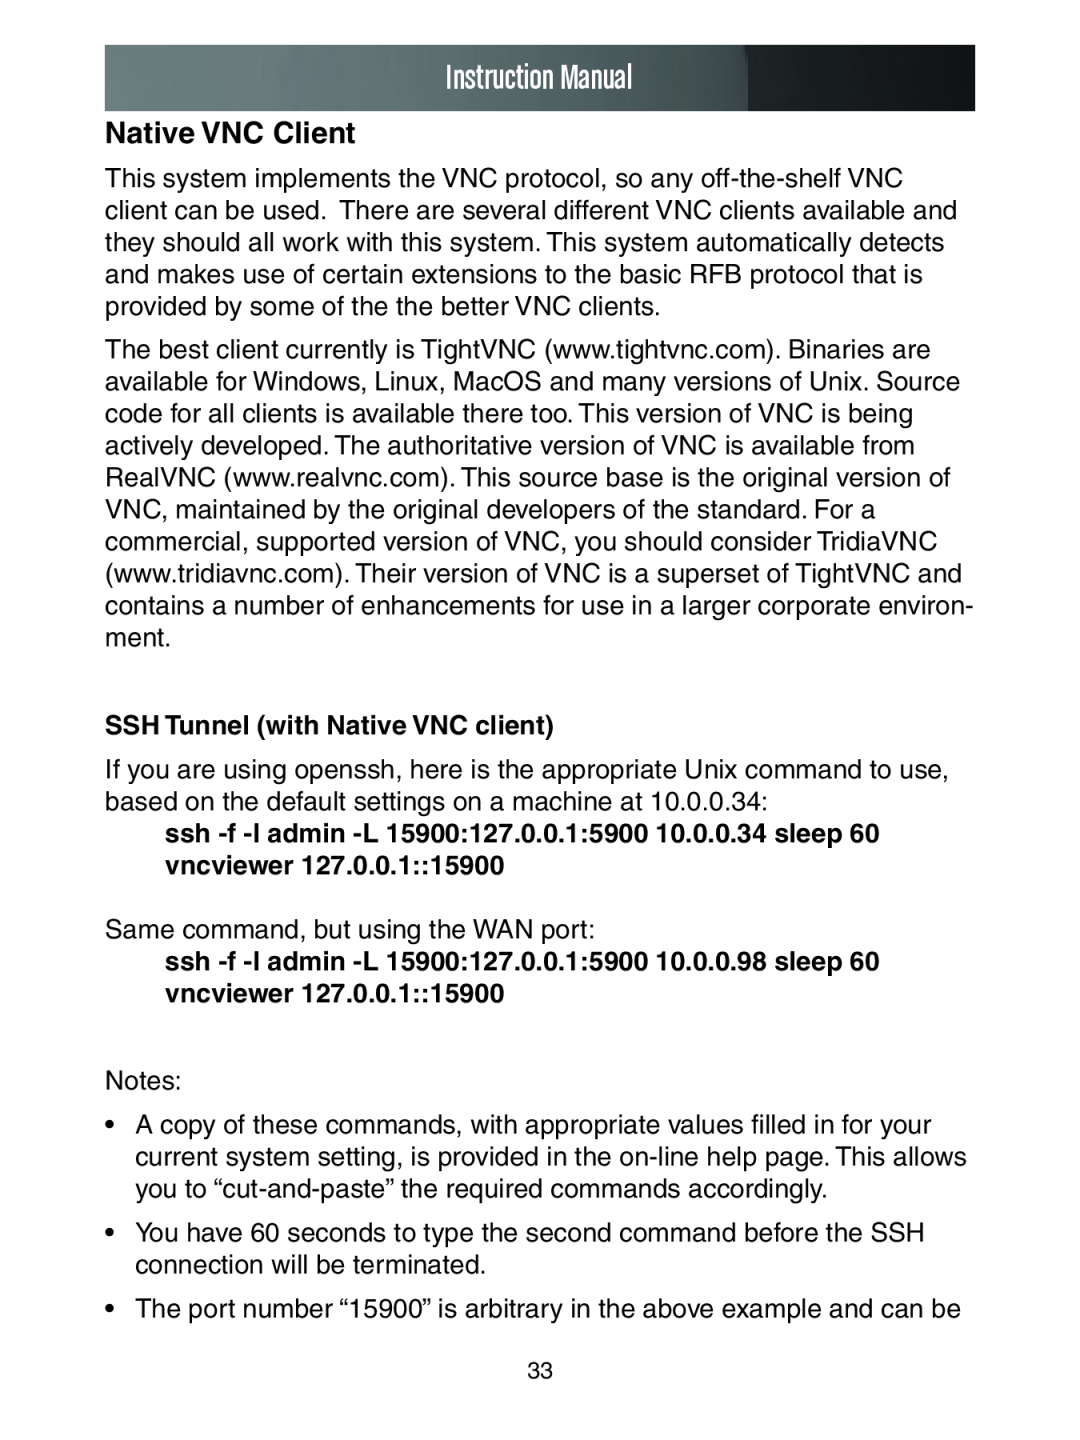 StarTech.com SV1653DXI, SV3253DXI manual Native VNC Client, SSH Tunnel with Native VNC client, Instruction Manual 